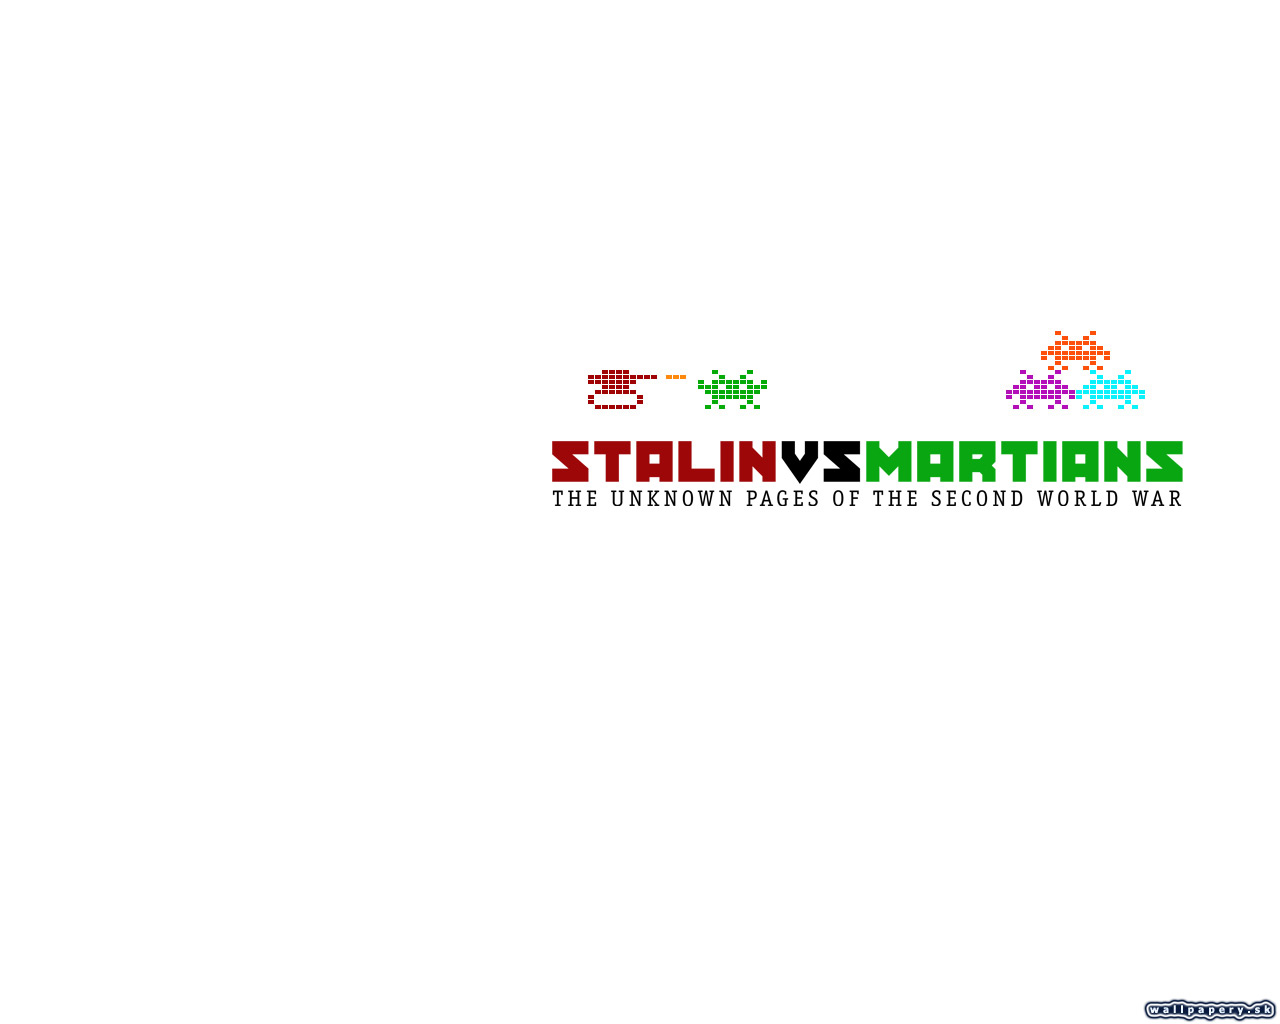 Stalin vs. Martians - wallpaper 2